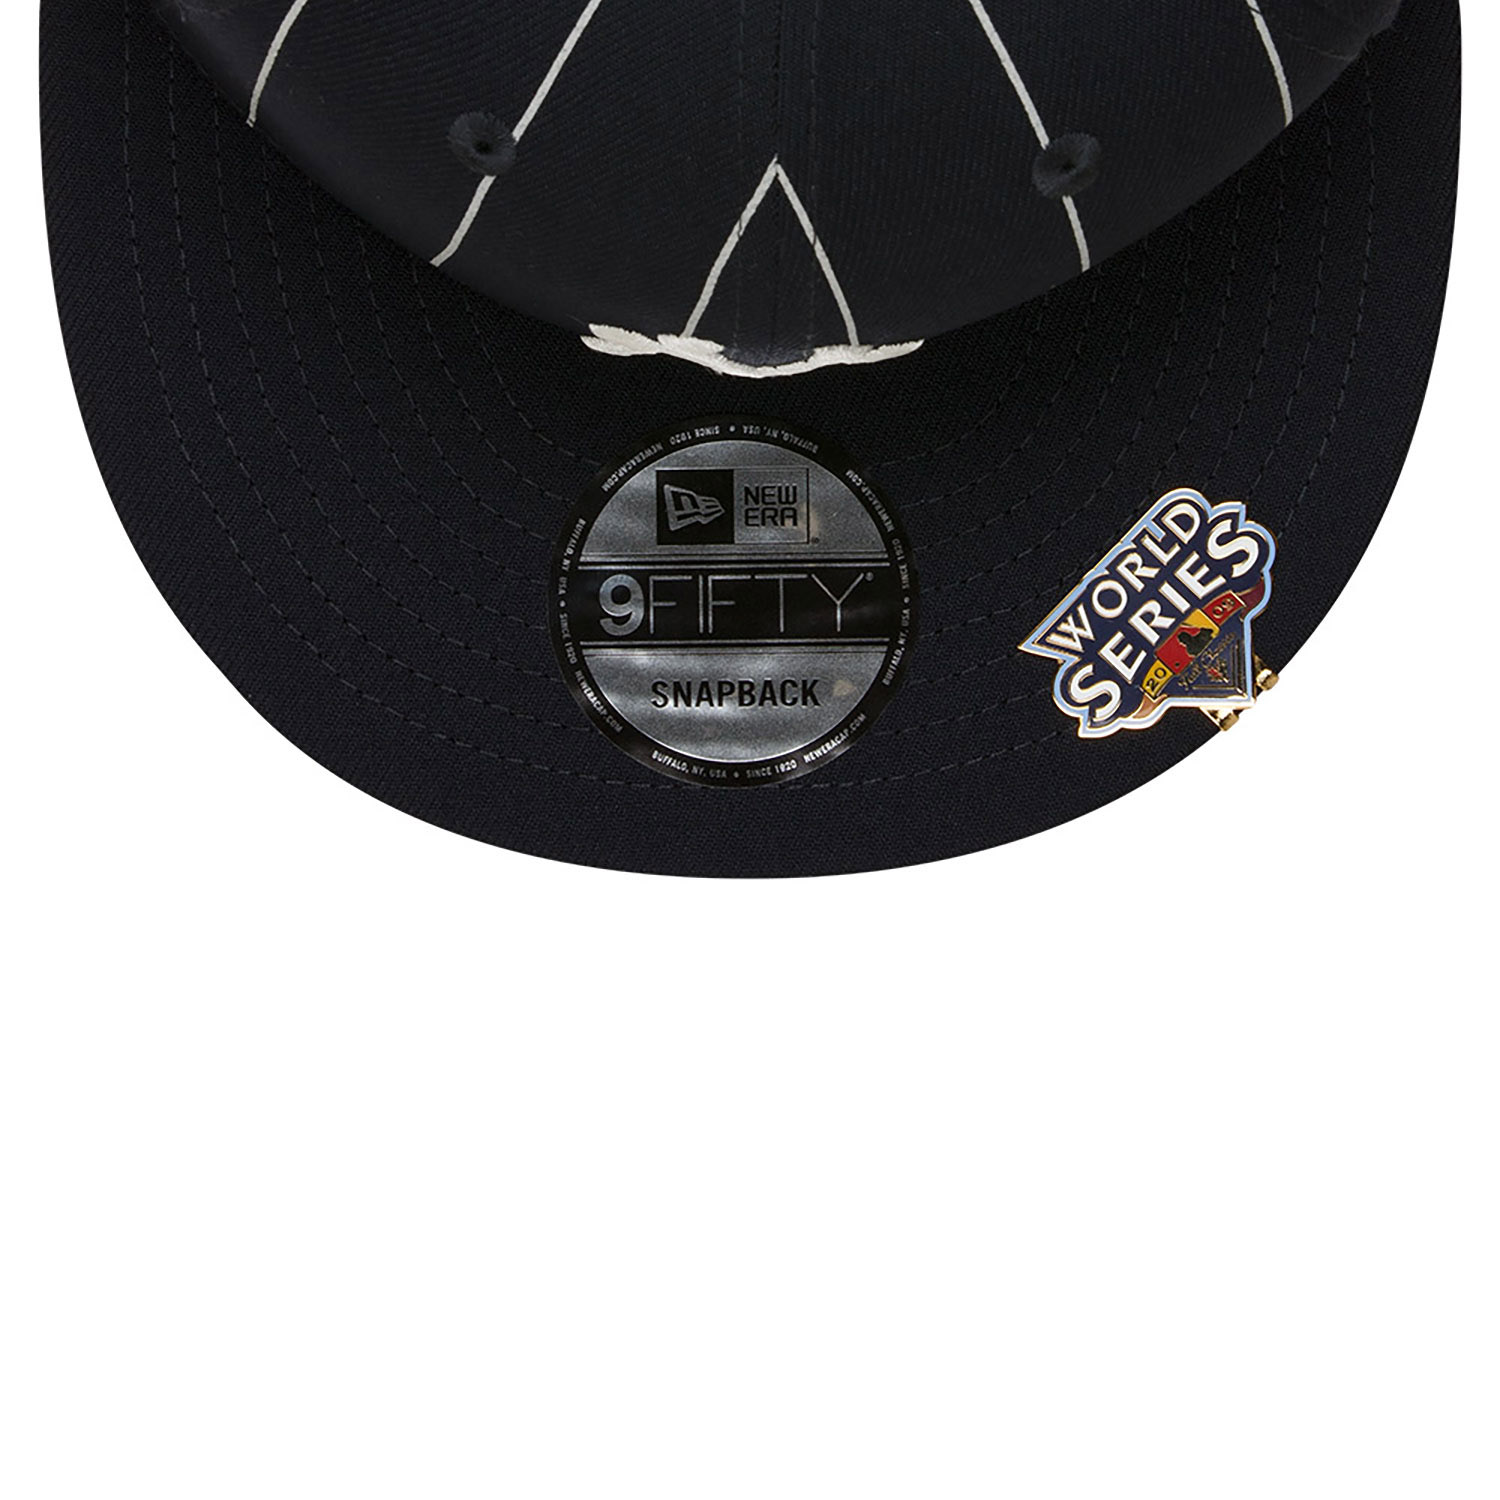 Dunkeblaue New York Yankees Pinstripe 9FIFTY Snapback Cap